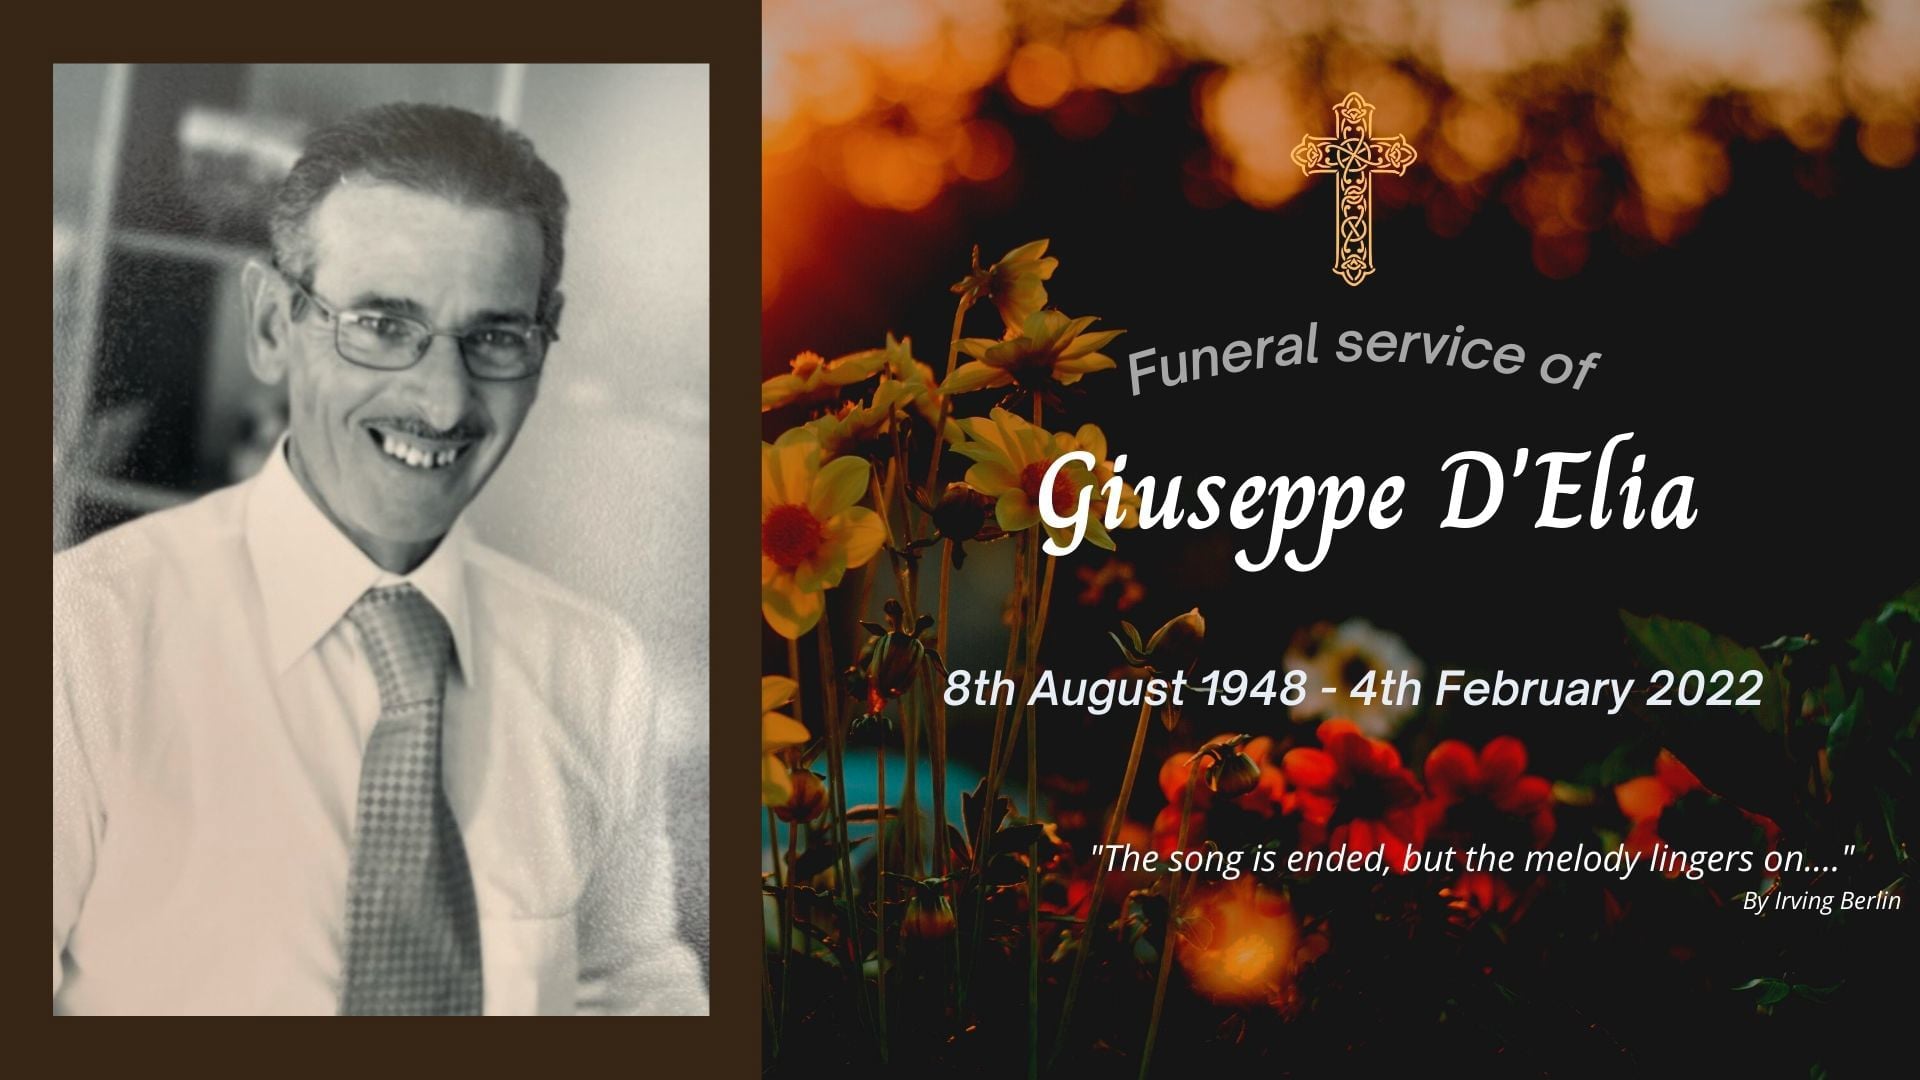 Funeral service of Giuseppe D'Elia